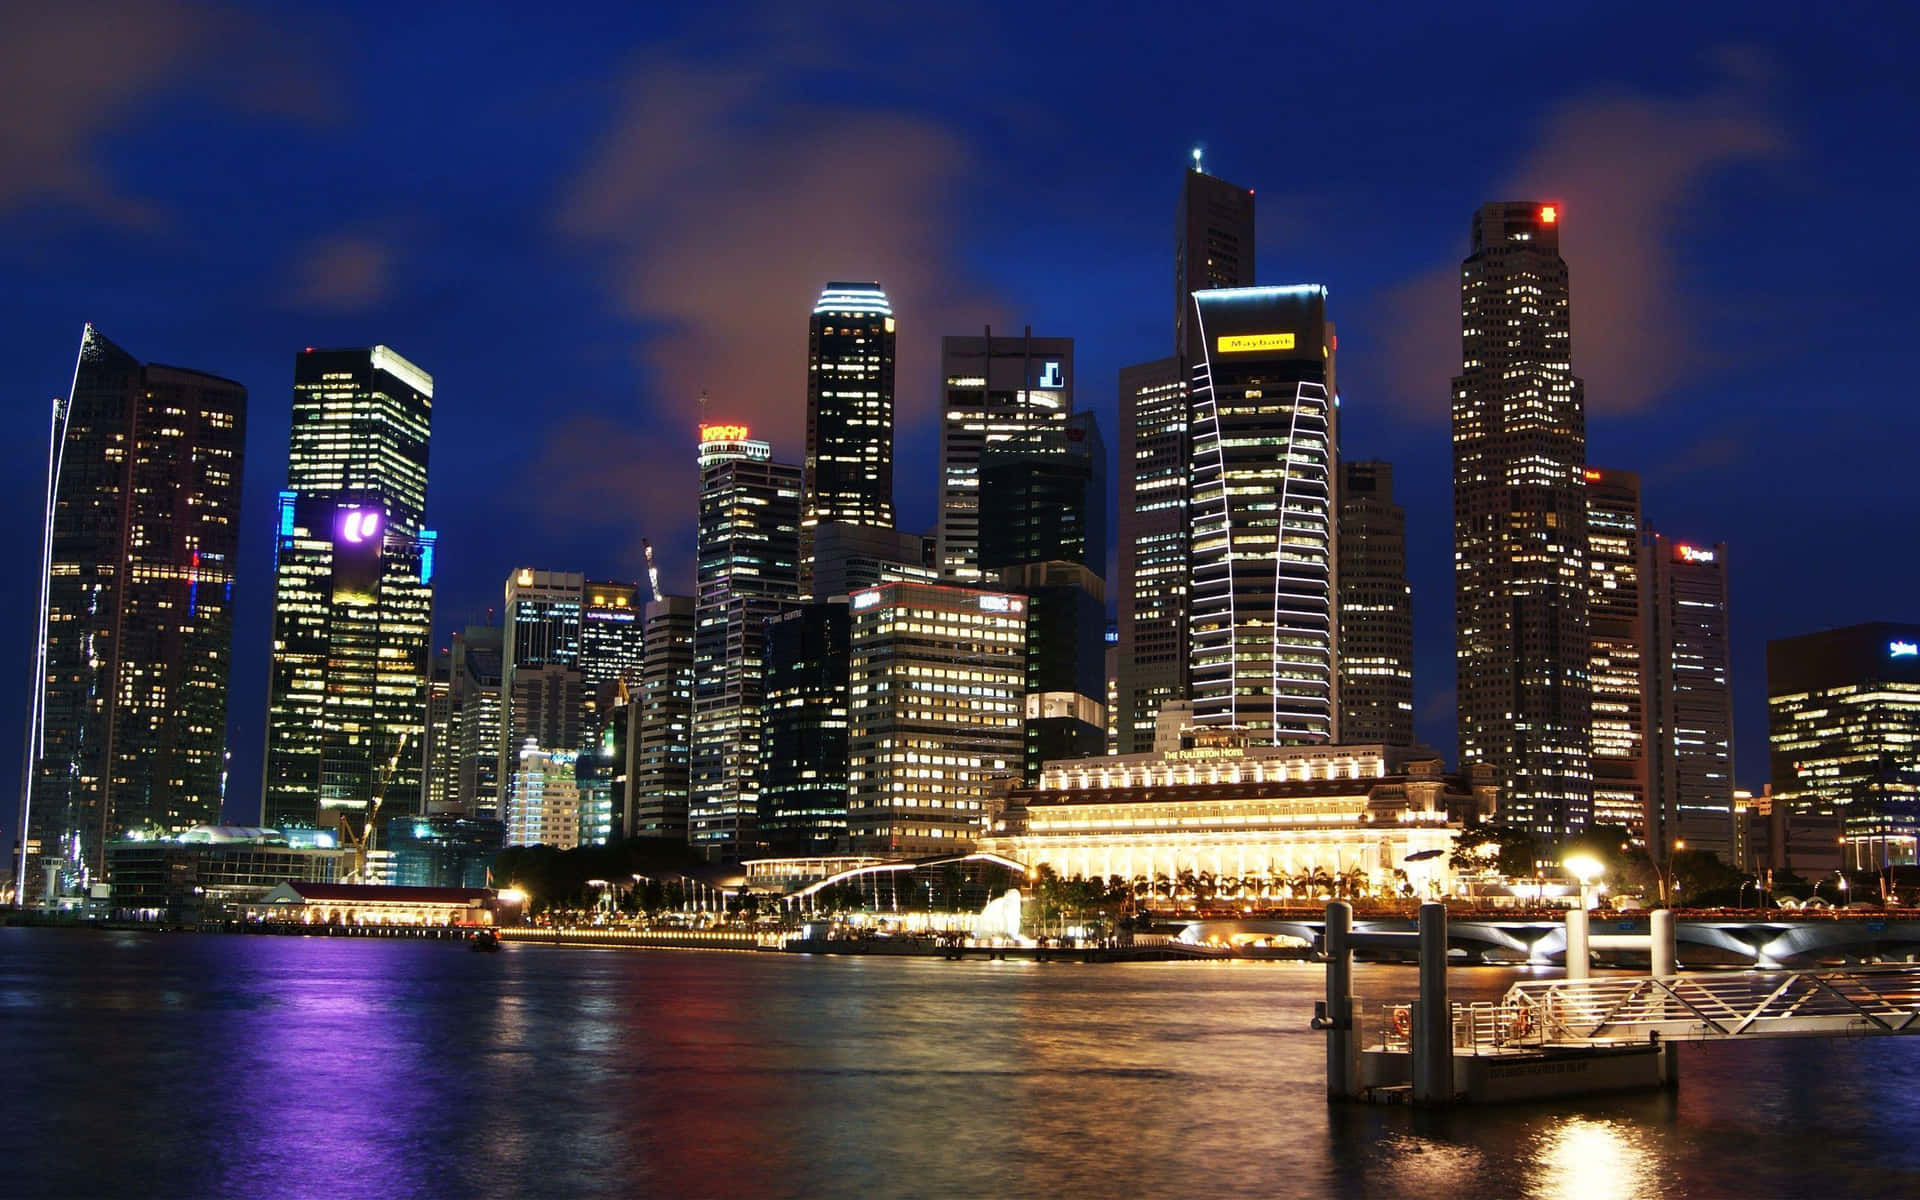 Explore the wonderful city of Singapore